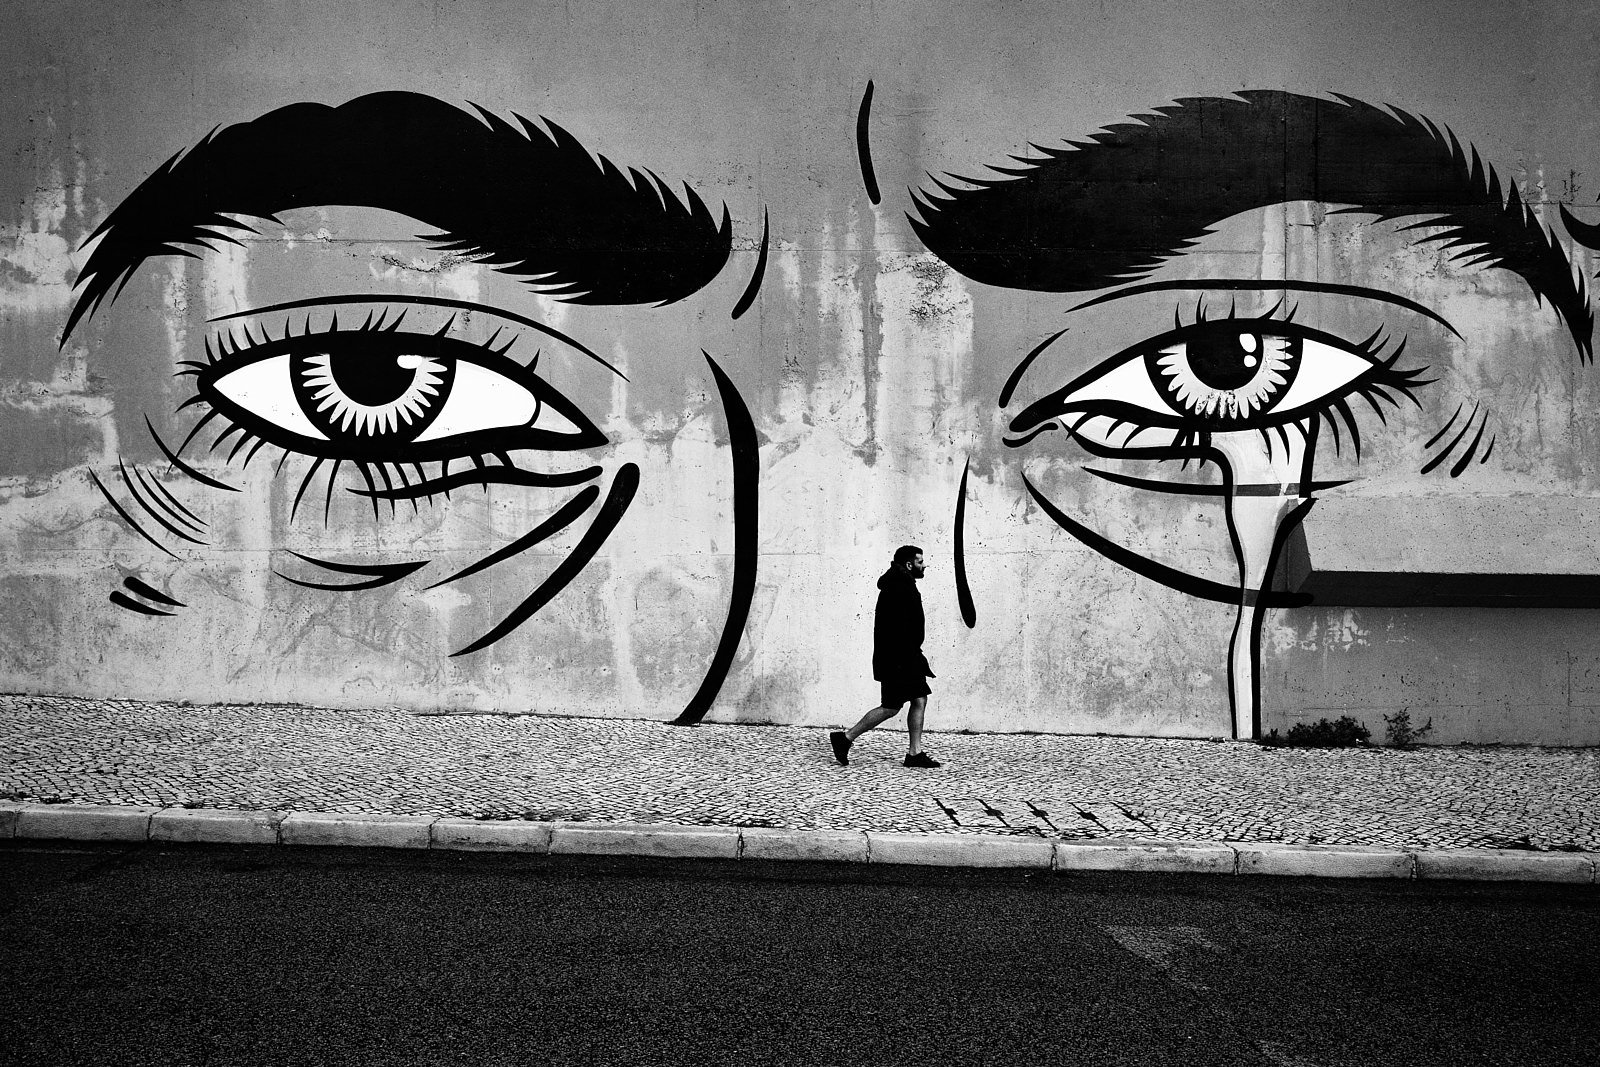 Streetphotography_SaschavanderWerf_Lissabon2211_11.jpg